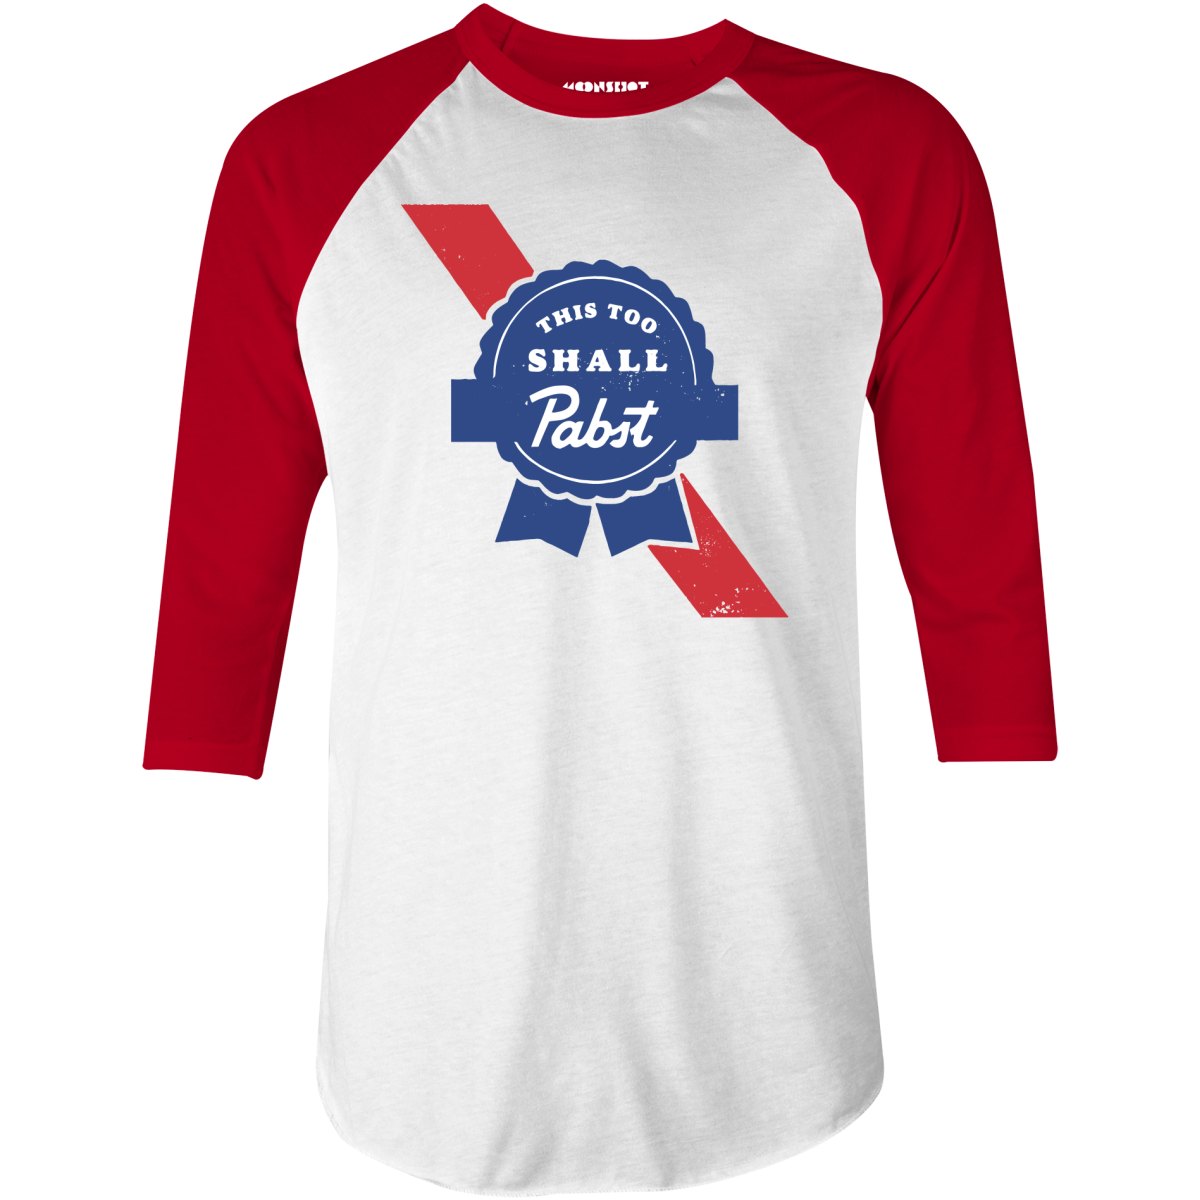 This Too Shall Pabst - 3/4 Sleeve Raglan T-Shirt